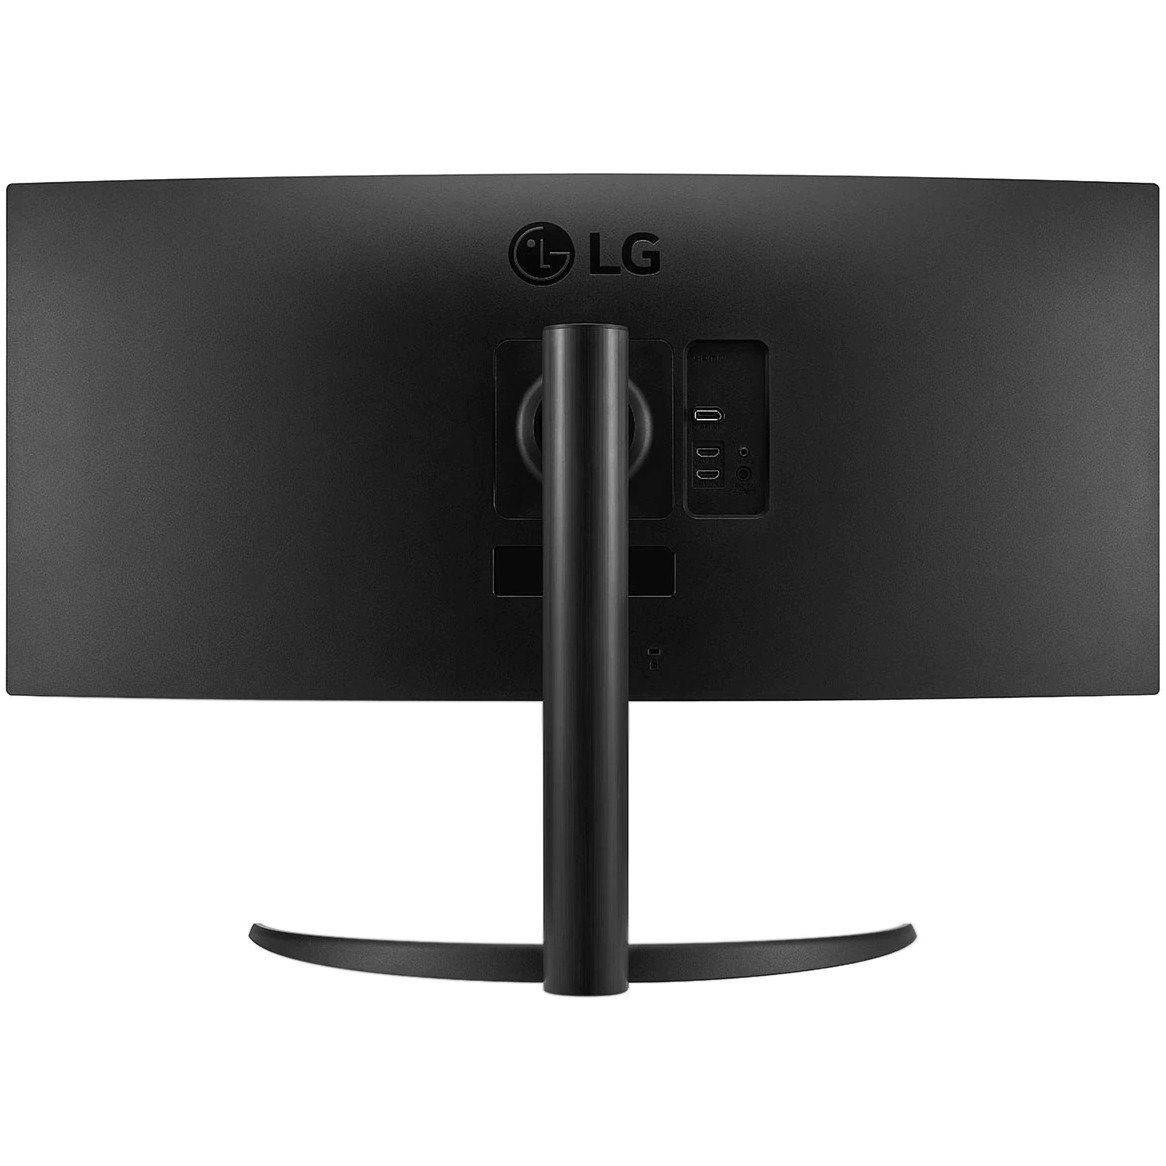 LG Ultrawide 34WP65C-B 34" Class UW-QHD Curved Screen Gaming LCD Monitor - 21:9 - Noir